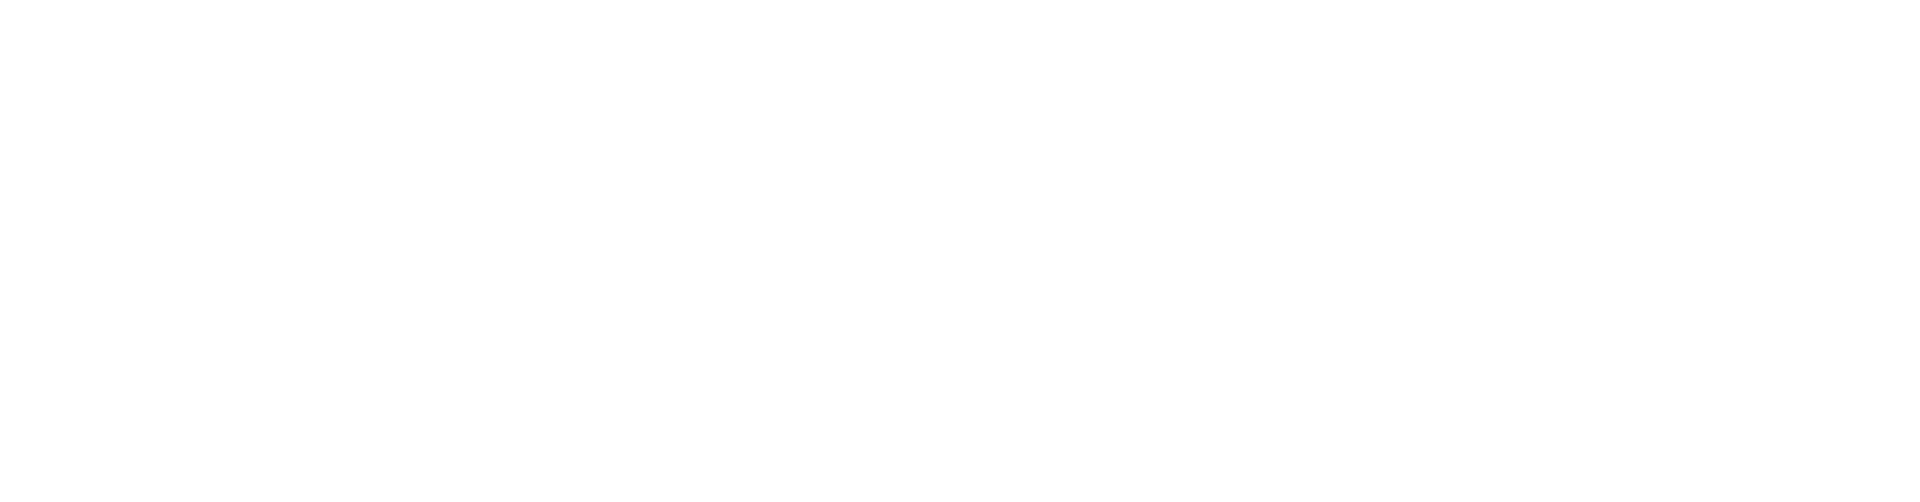 Memvision Internet Services